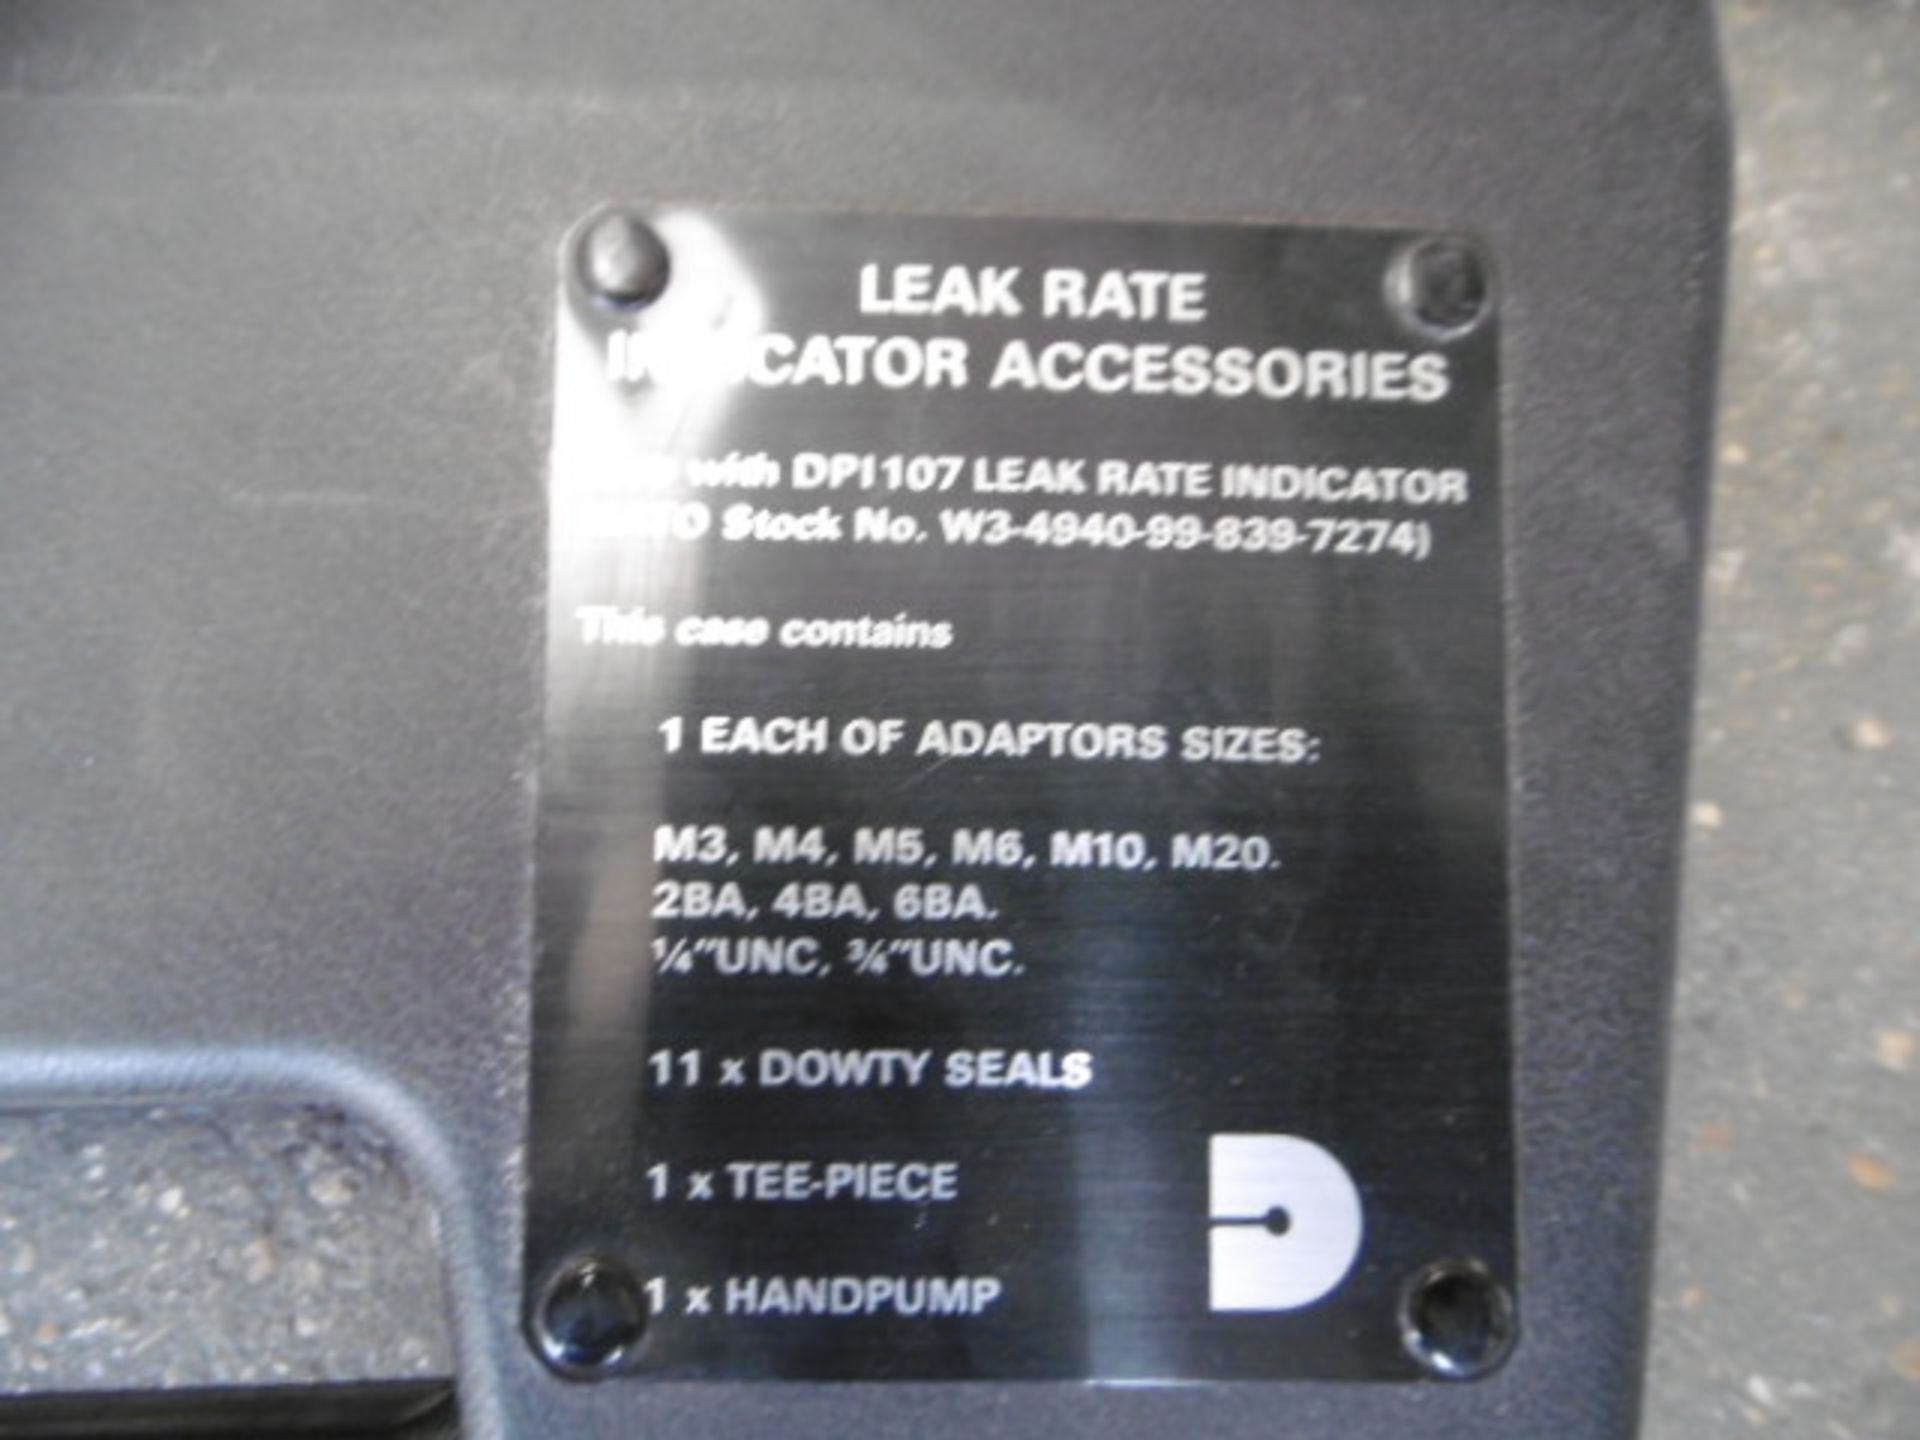 Druck DPI107 Leak Rate Indicator Kit - Image 7 of 9